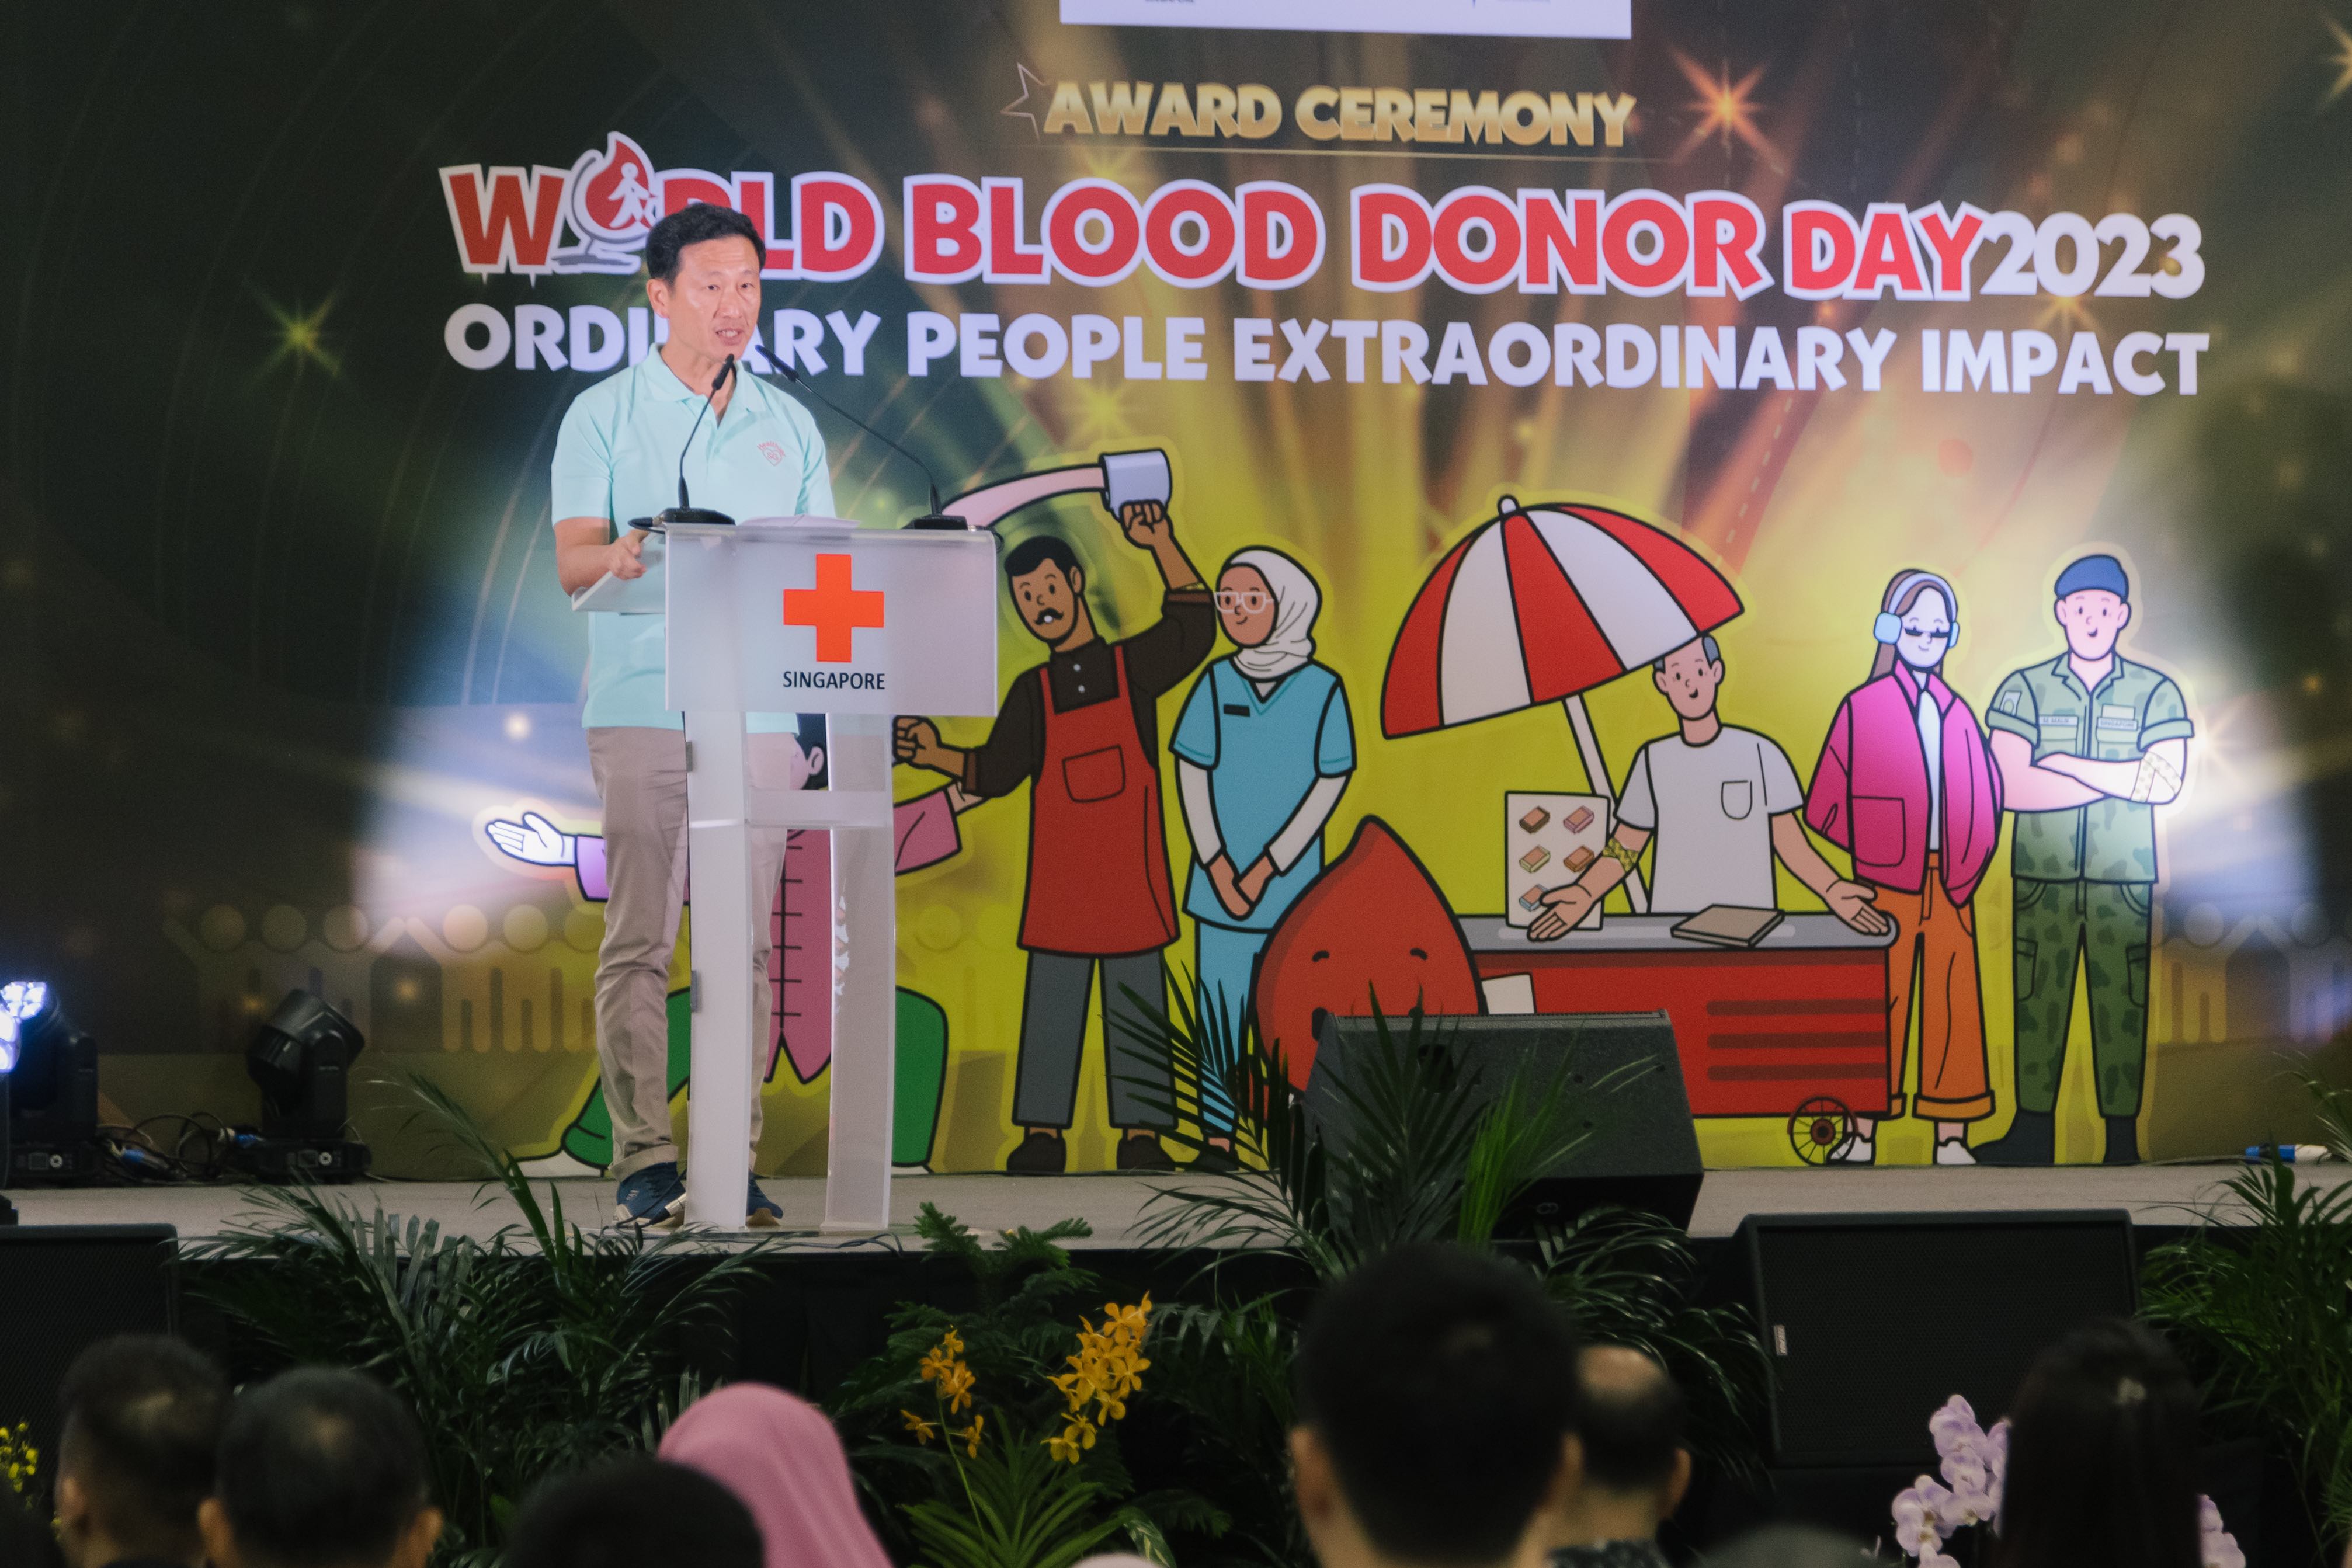 WBDD2023 Speech by Minister Ong Ye Kung